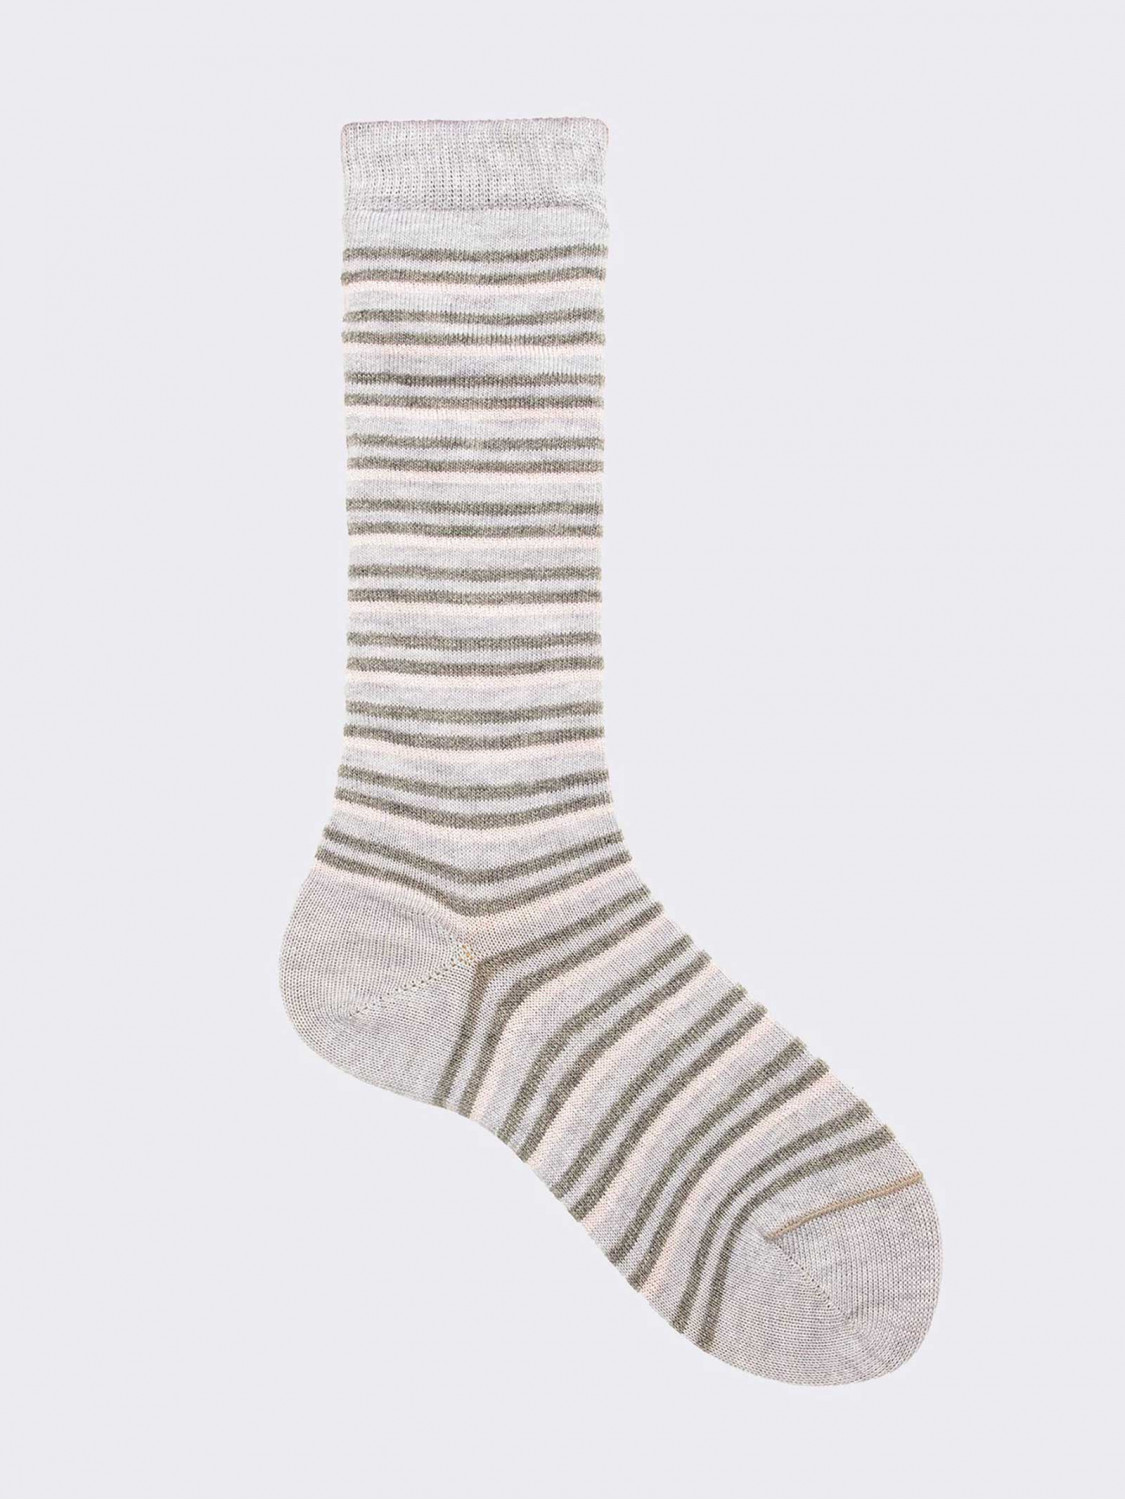 Gestreifte gemusterte lange Socken aus warmer Baumwolle